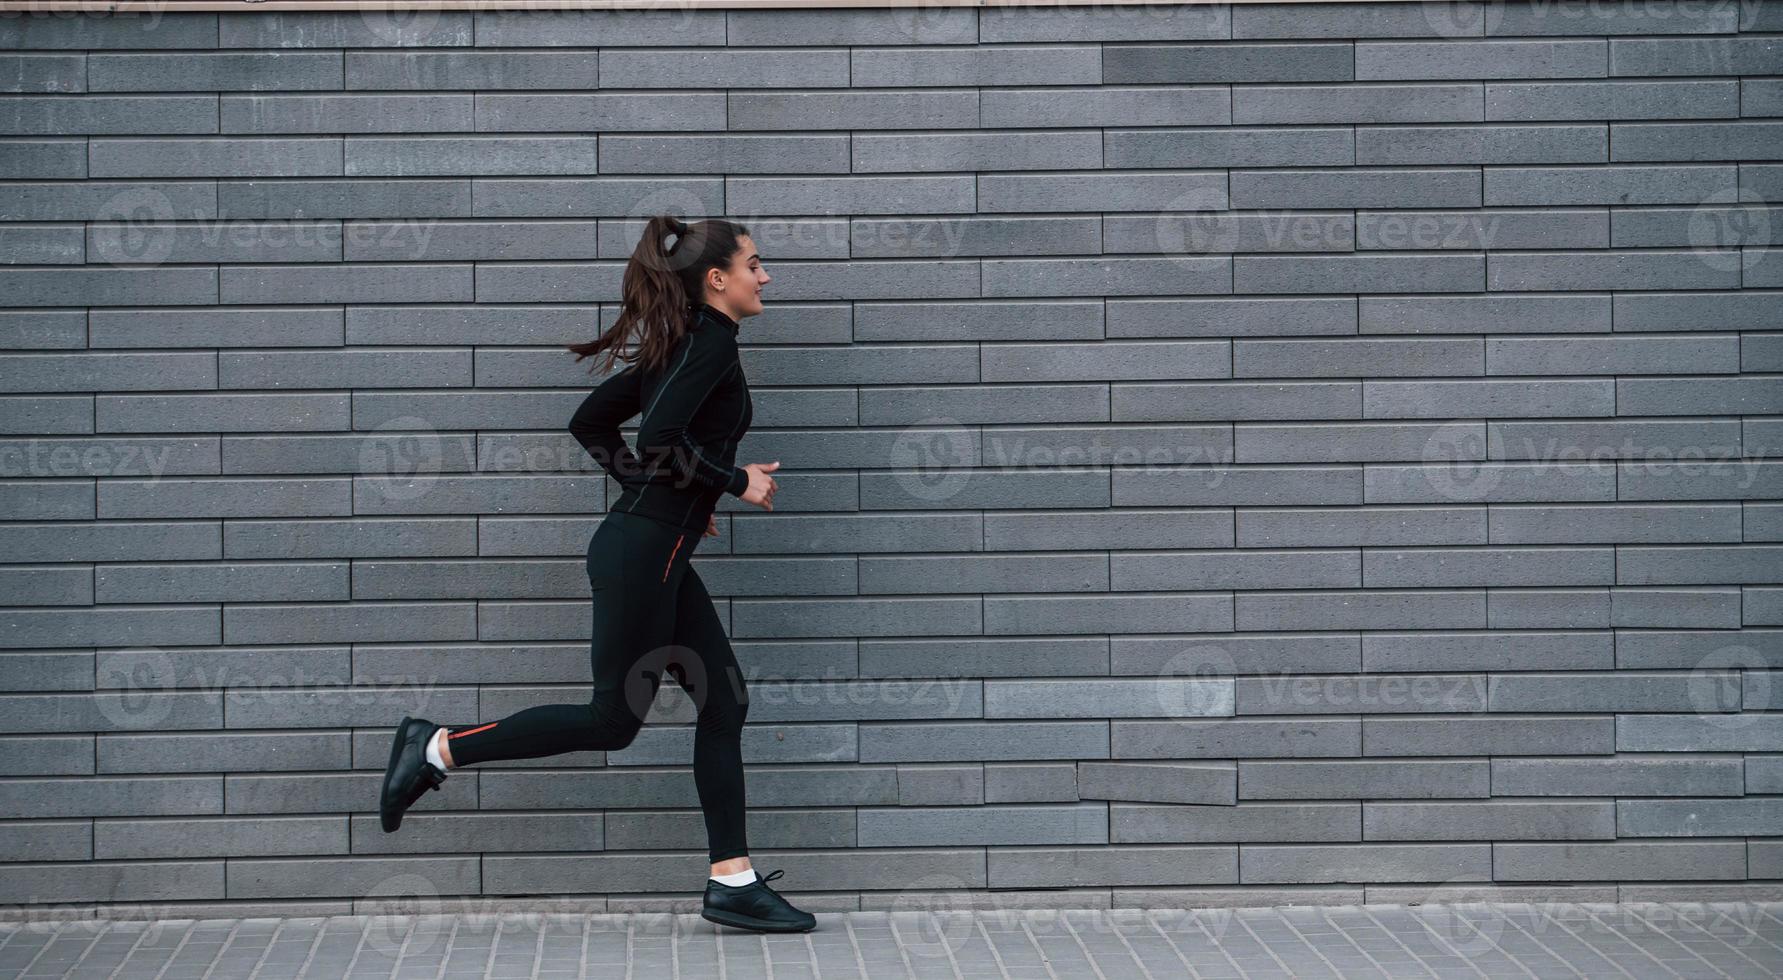 joven deportista con ropa deportiva negra corriendo al aire libre cerca de la pared gris foto